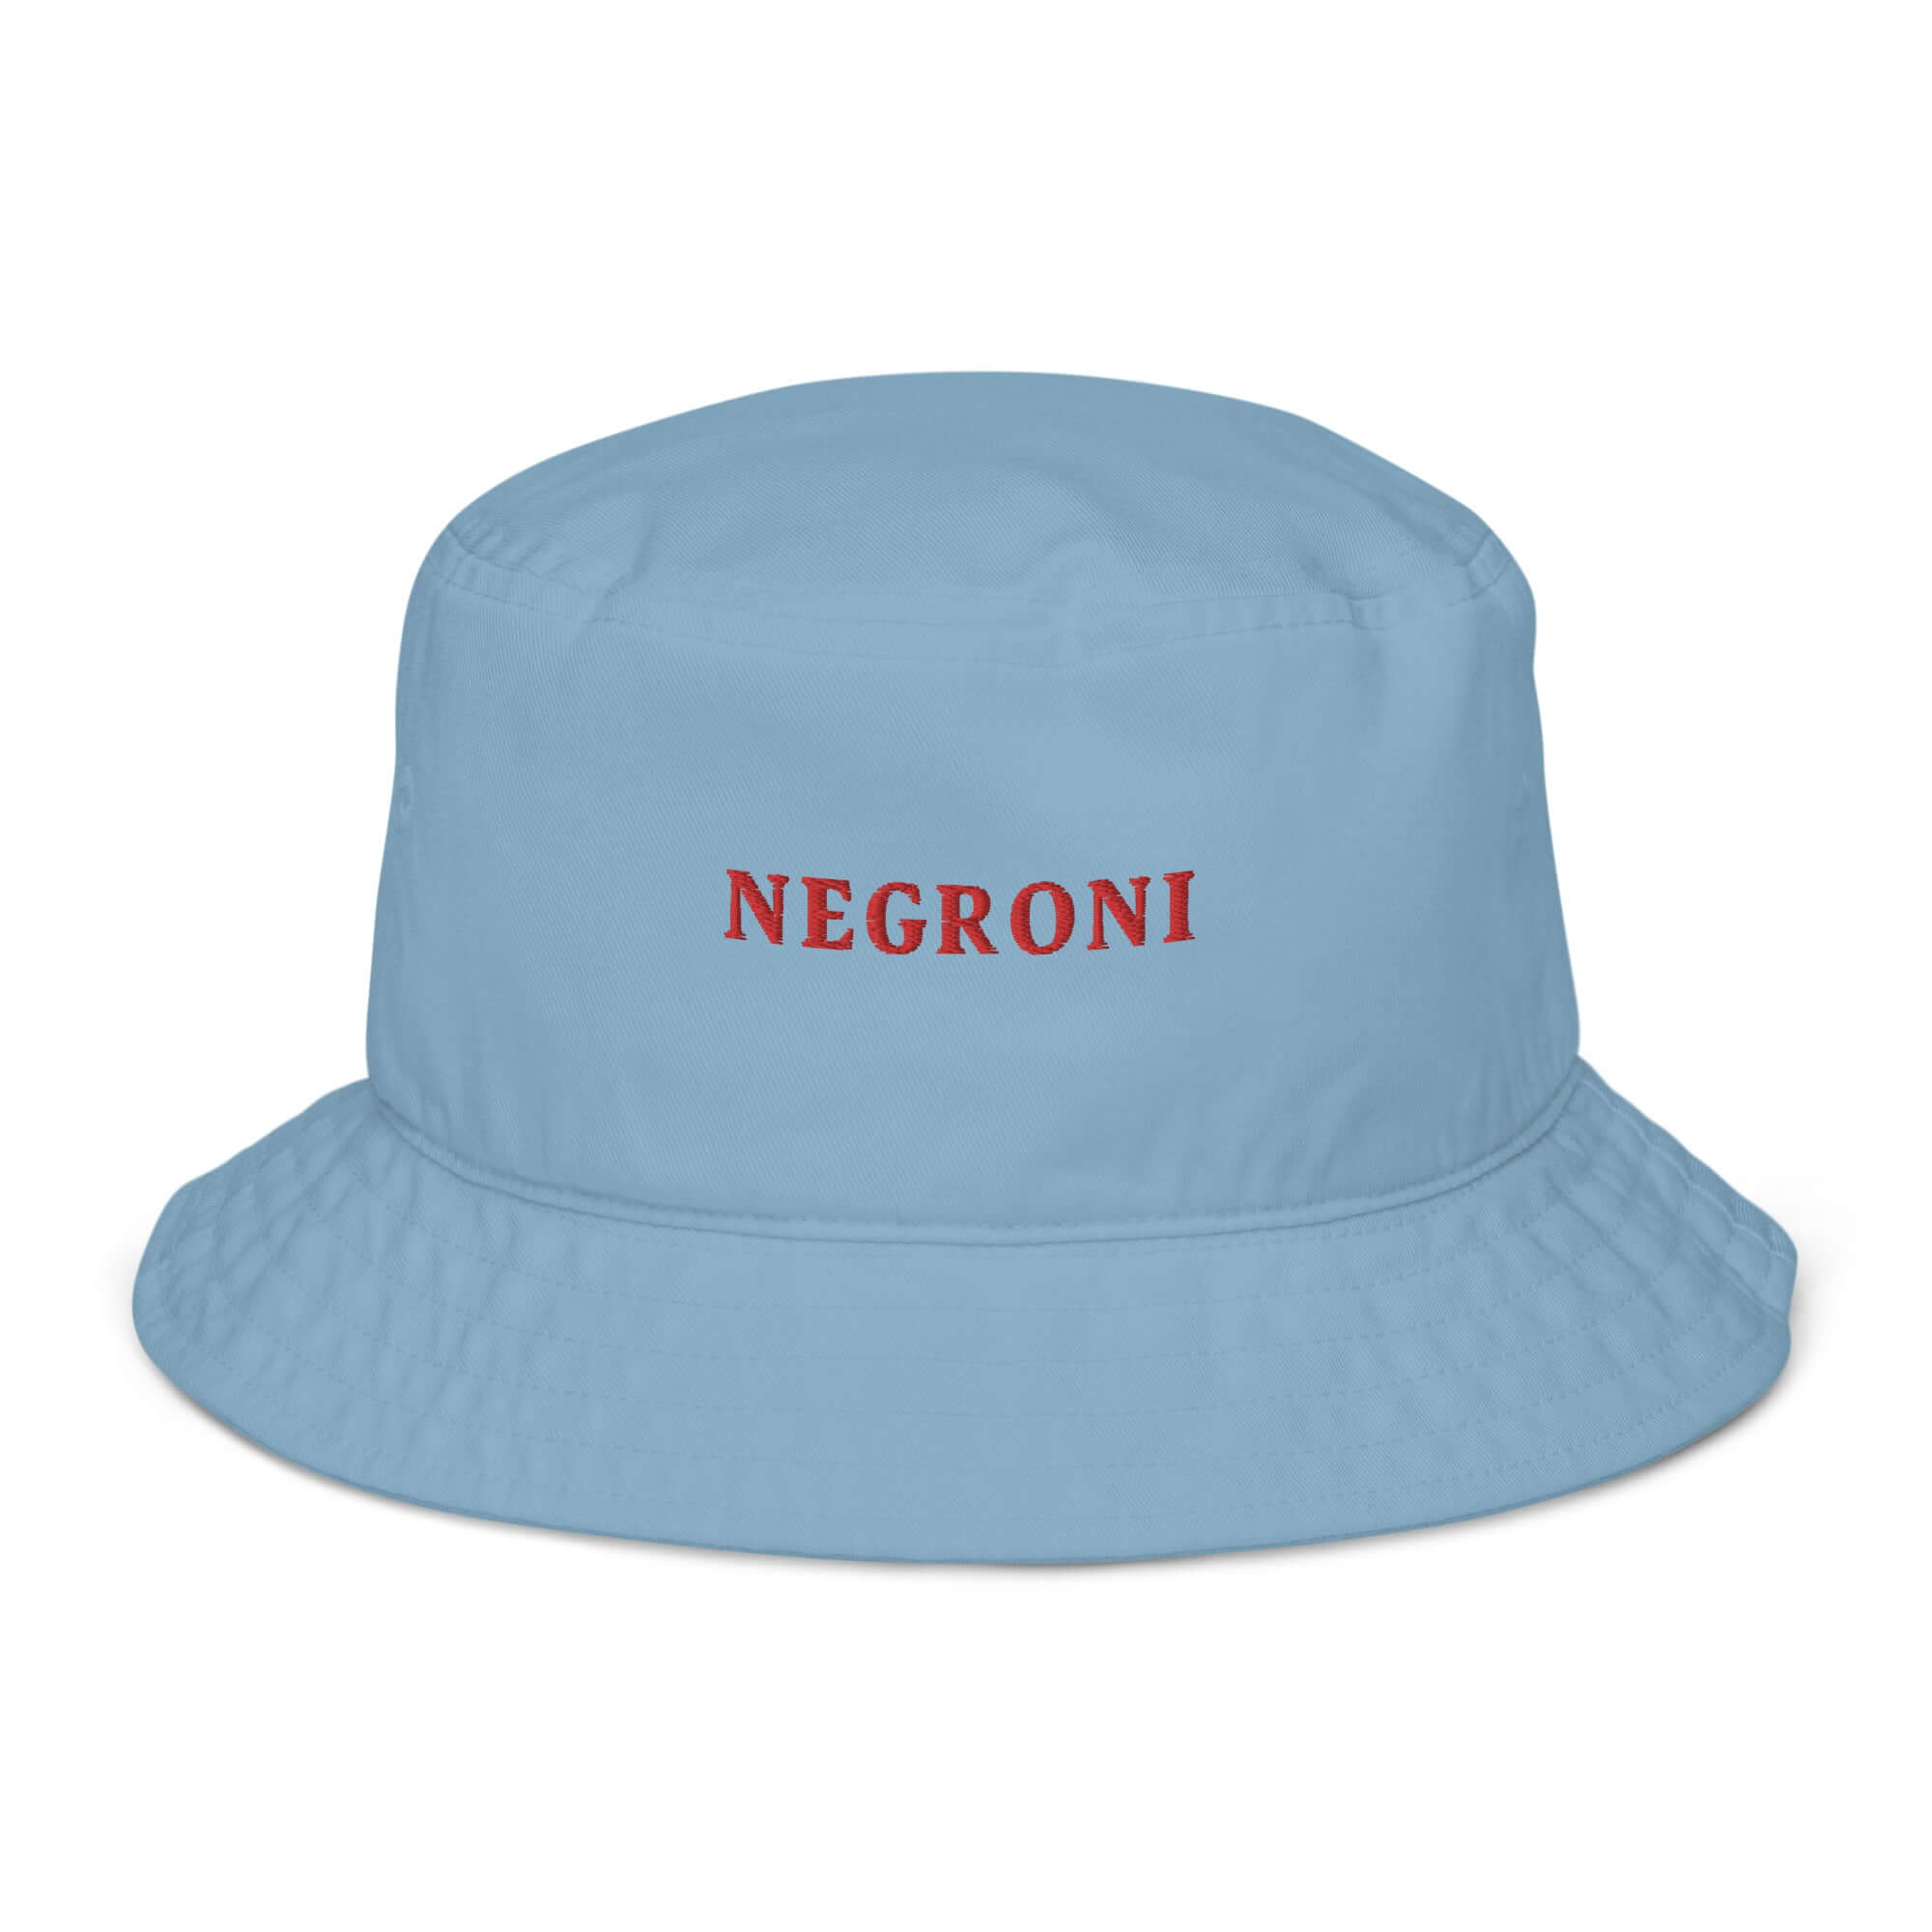 Negroni Bucket Hat - The Refined Spirit